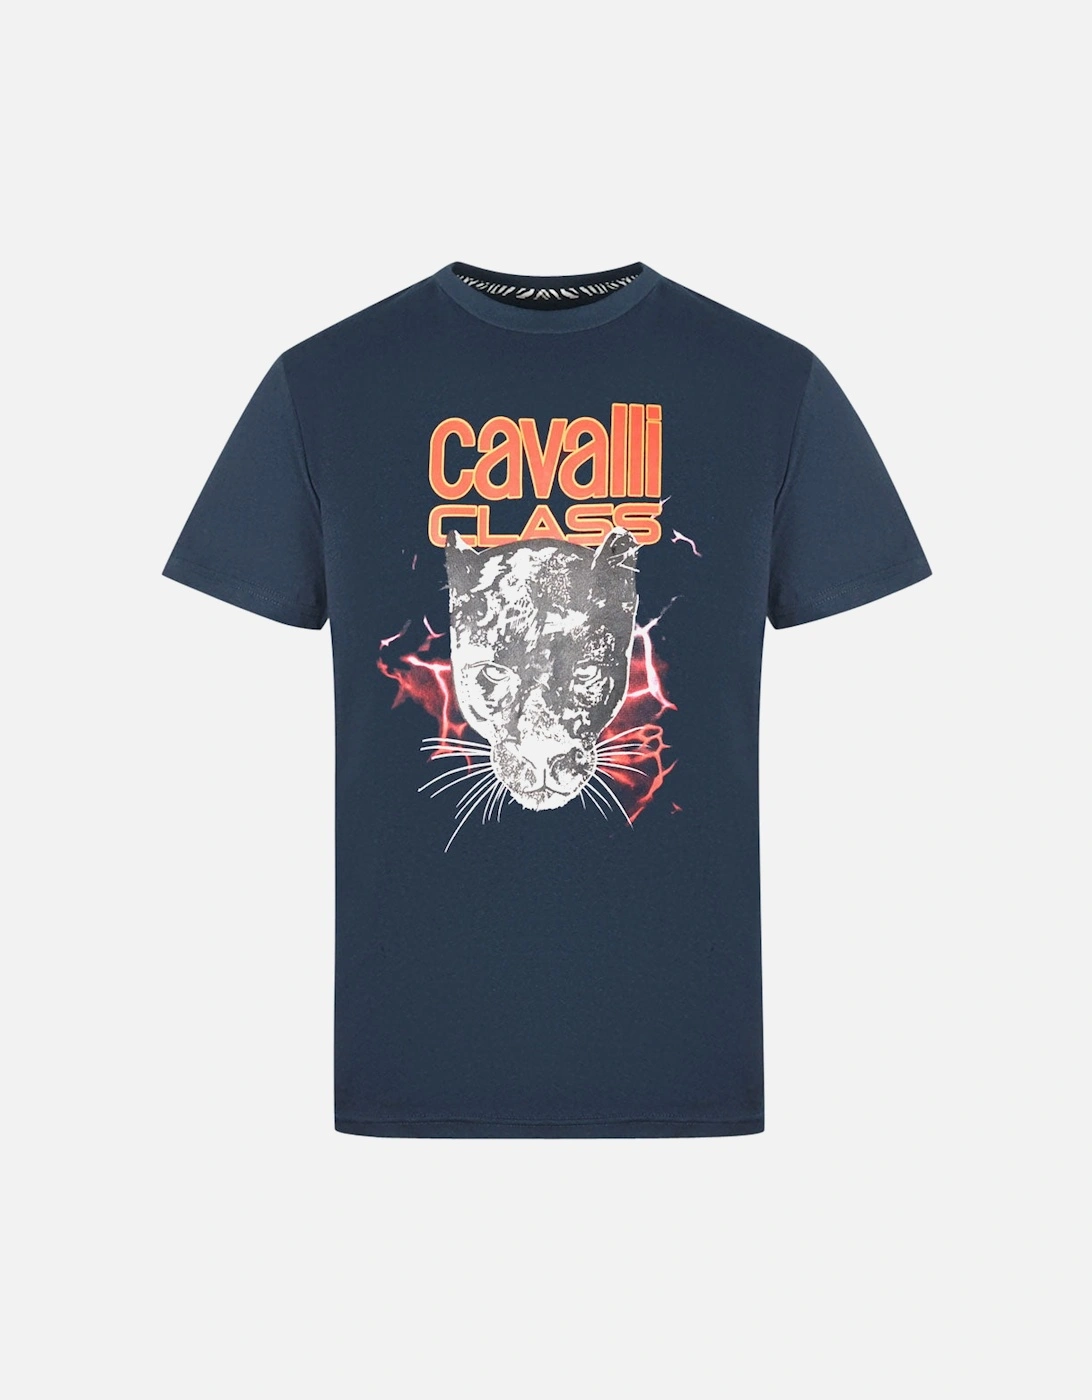 Cavalli Class Lightning Panther Design Navy T-Shirt, 3 of 2